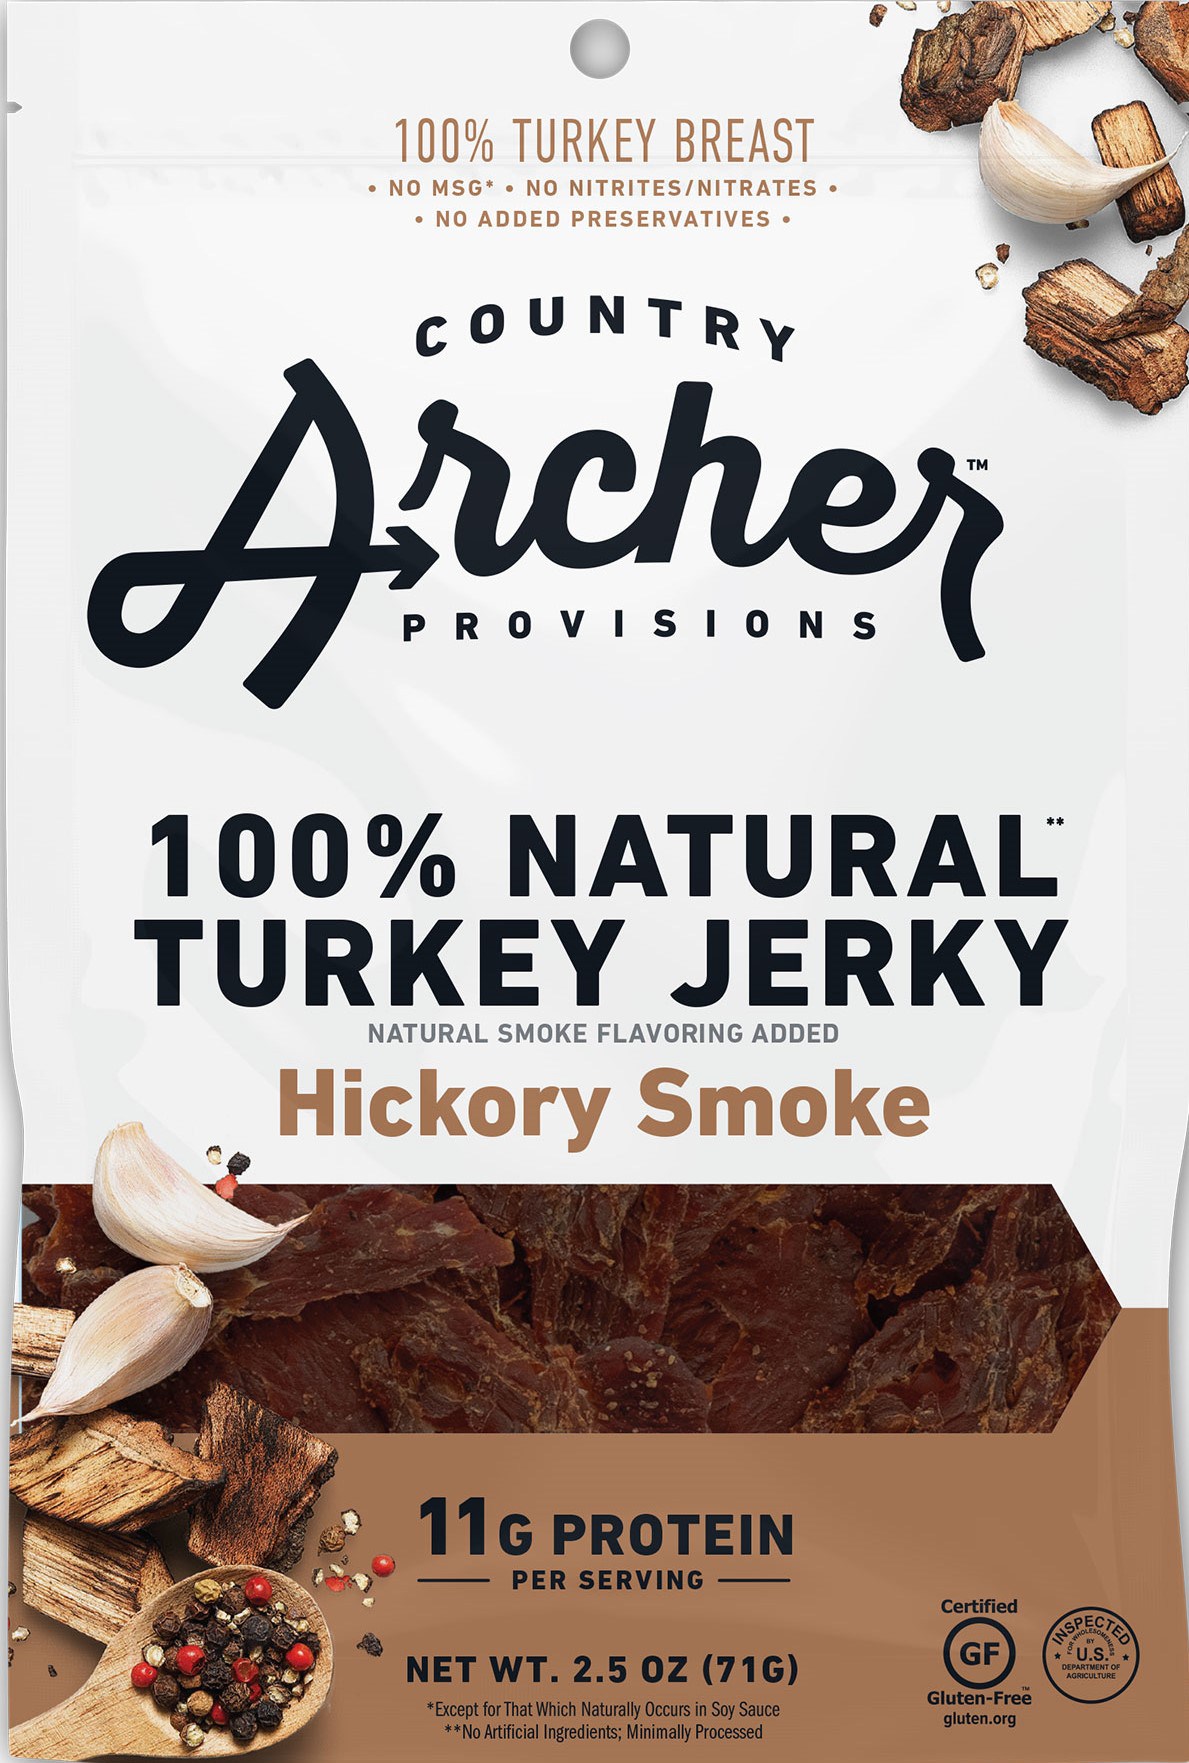 Вяленое мясо - 2,5 унции. Country Archer Jerky Co. country archer jerky говяжья палочка 28 г 1 унция